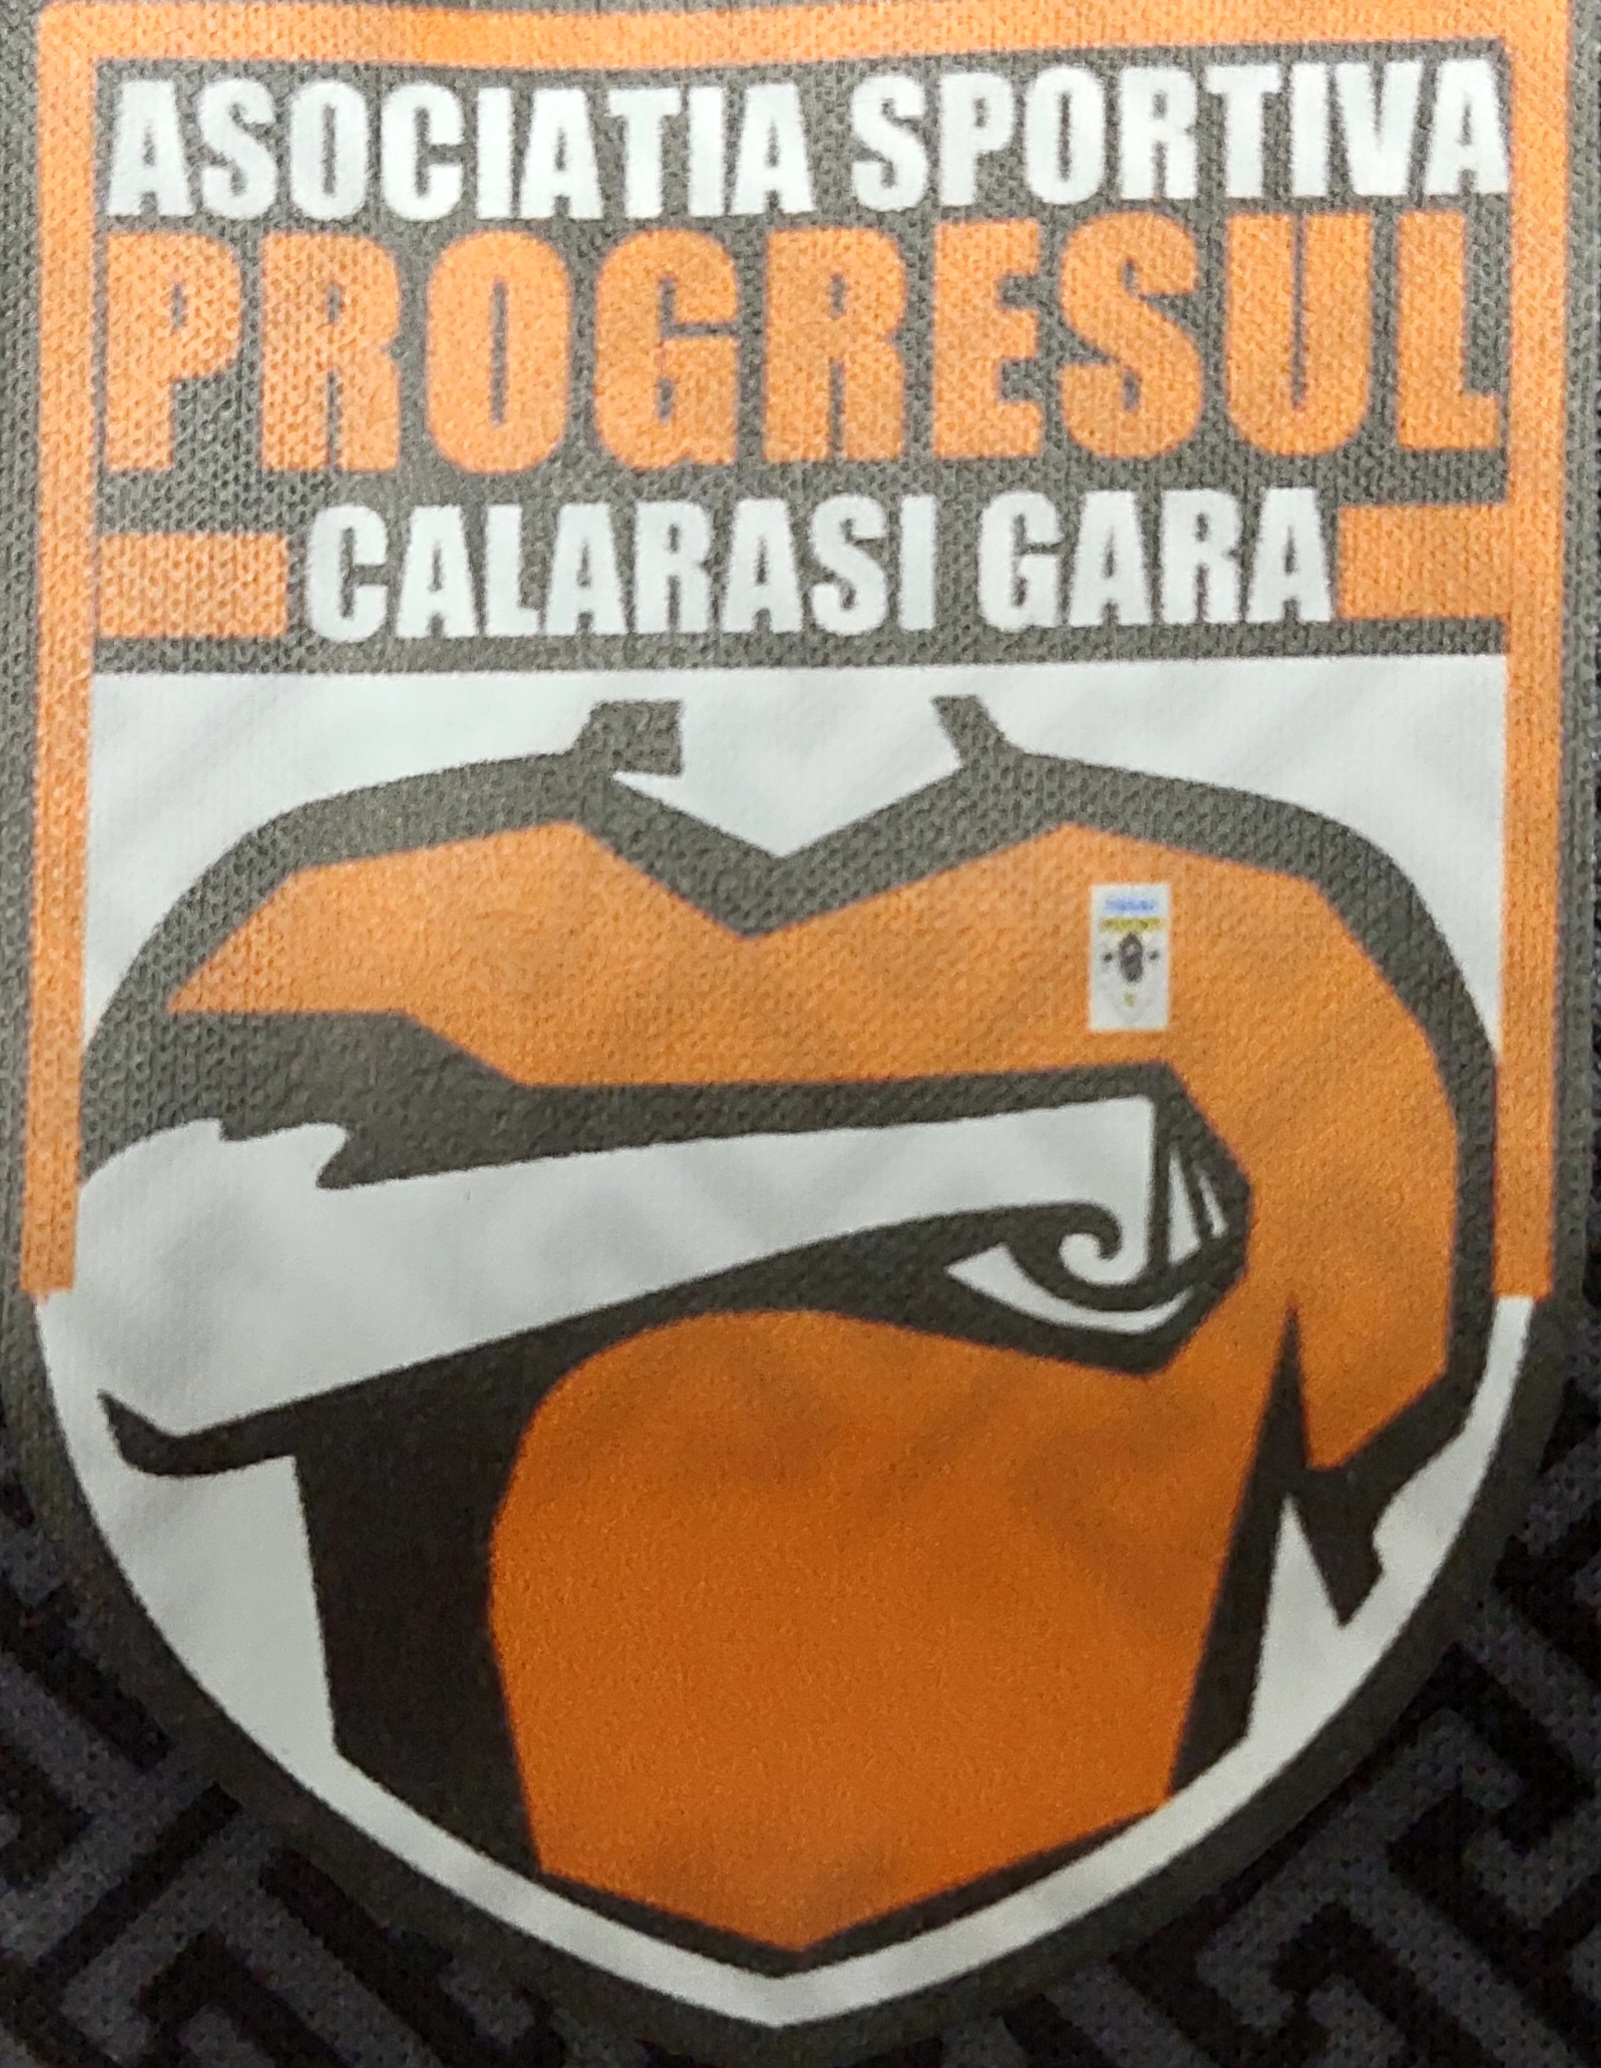 AFCS PROGRESUL CALARASI GARA